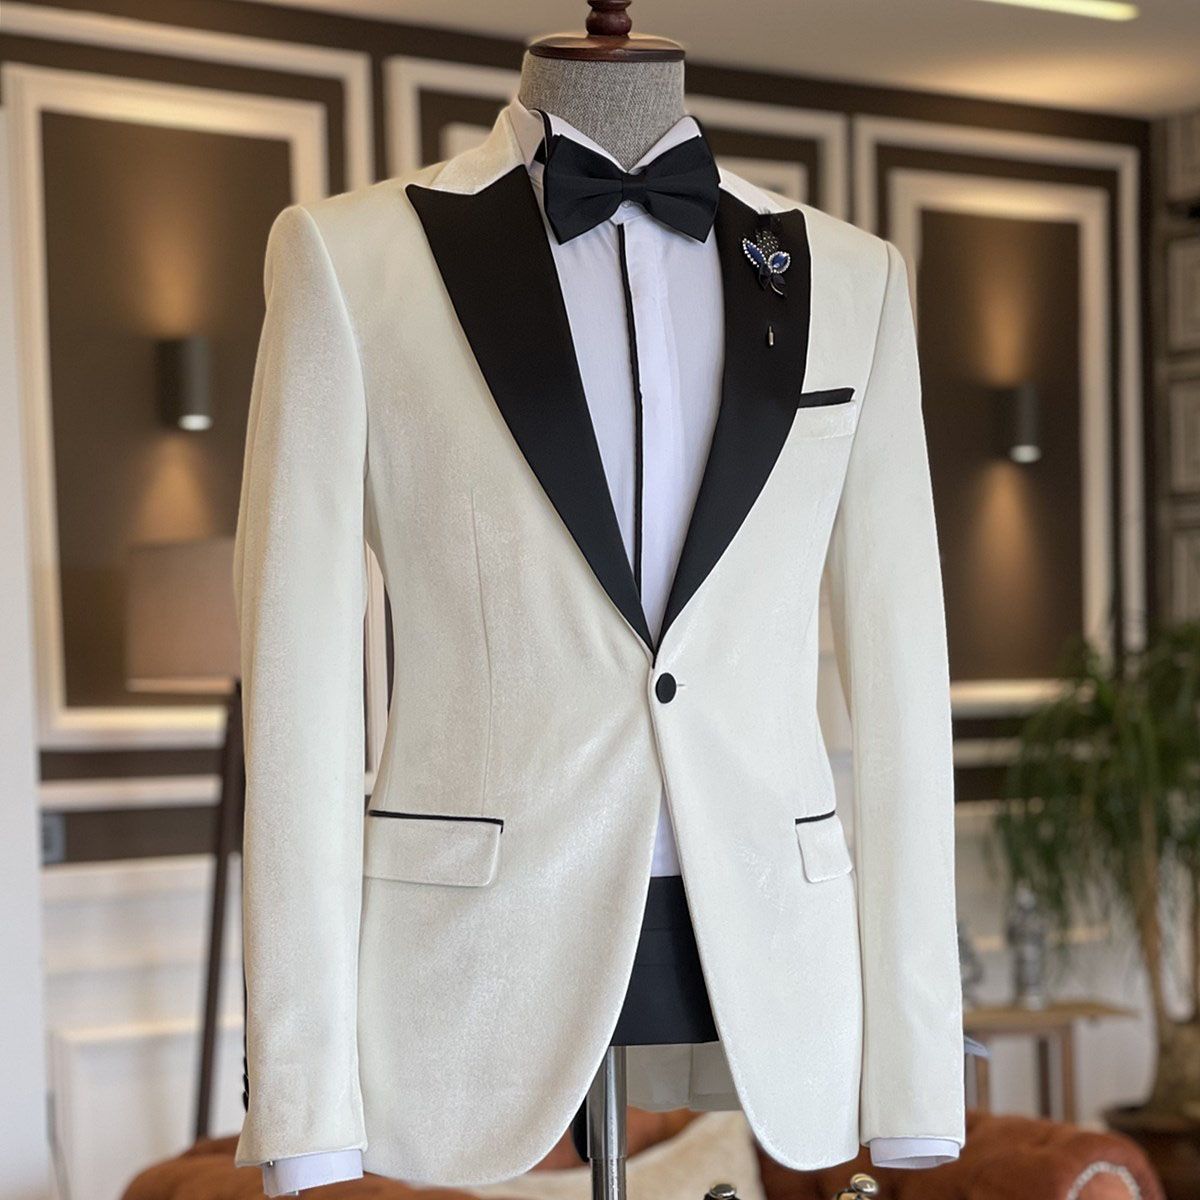 Smart White Suit For Reception - 2 Pieces Peaked Lapel Online-Prom Suits-BallBride